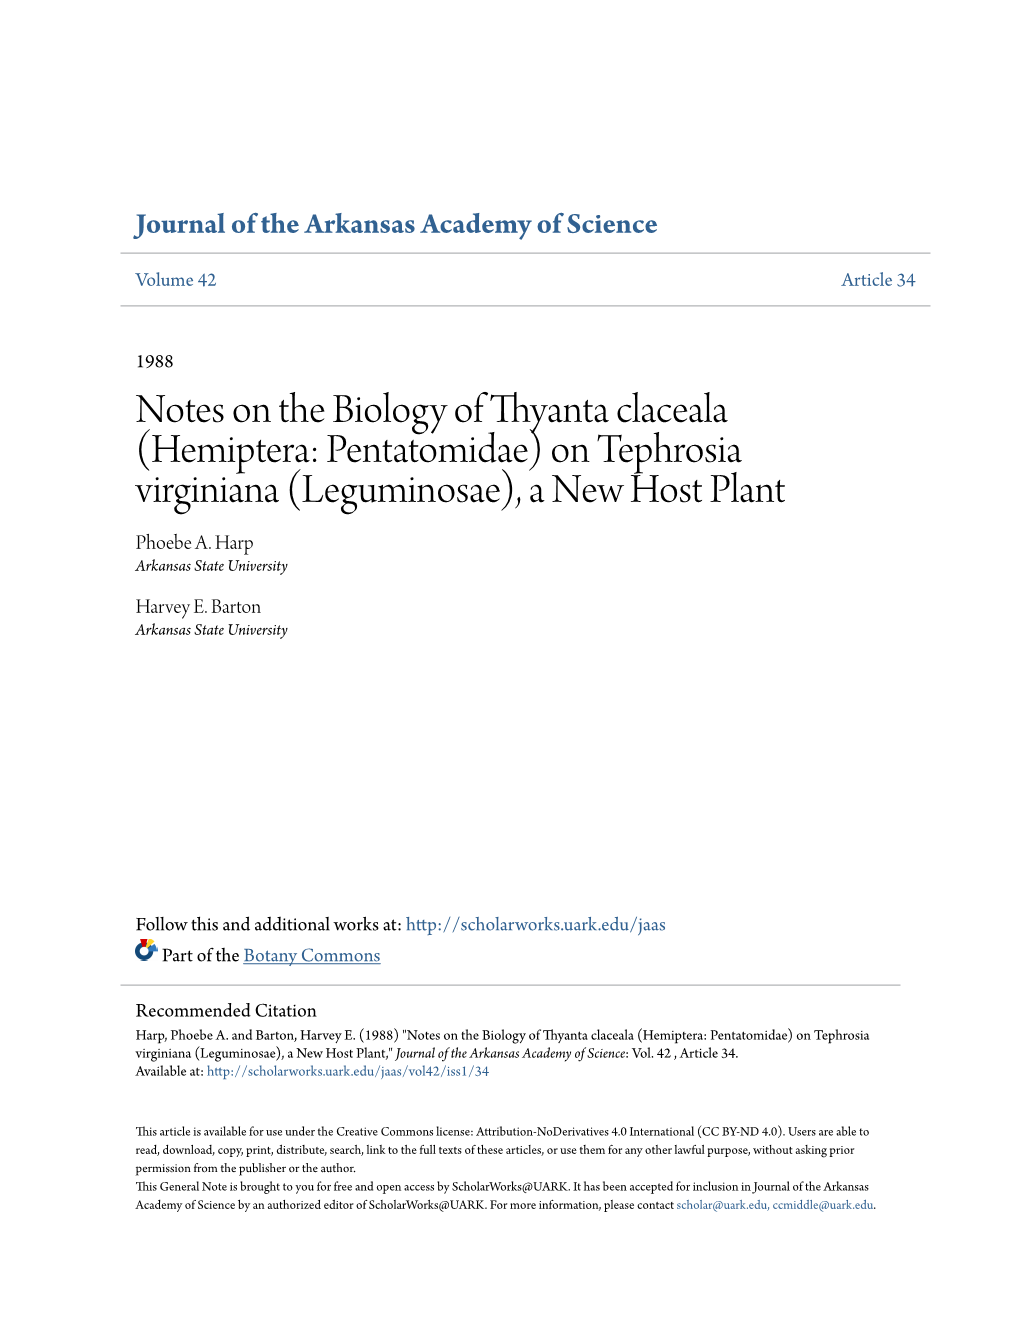 Notes on the Biology of Thyanta Claceala (Hemiptera: Pentatomidae) on Tephrosia Virginiana (Leguminosae), a New Host Plant Phoebe A